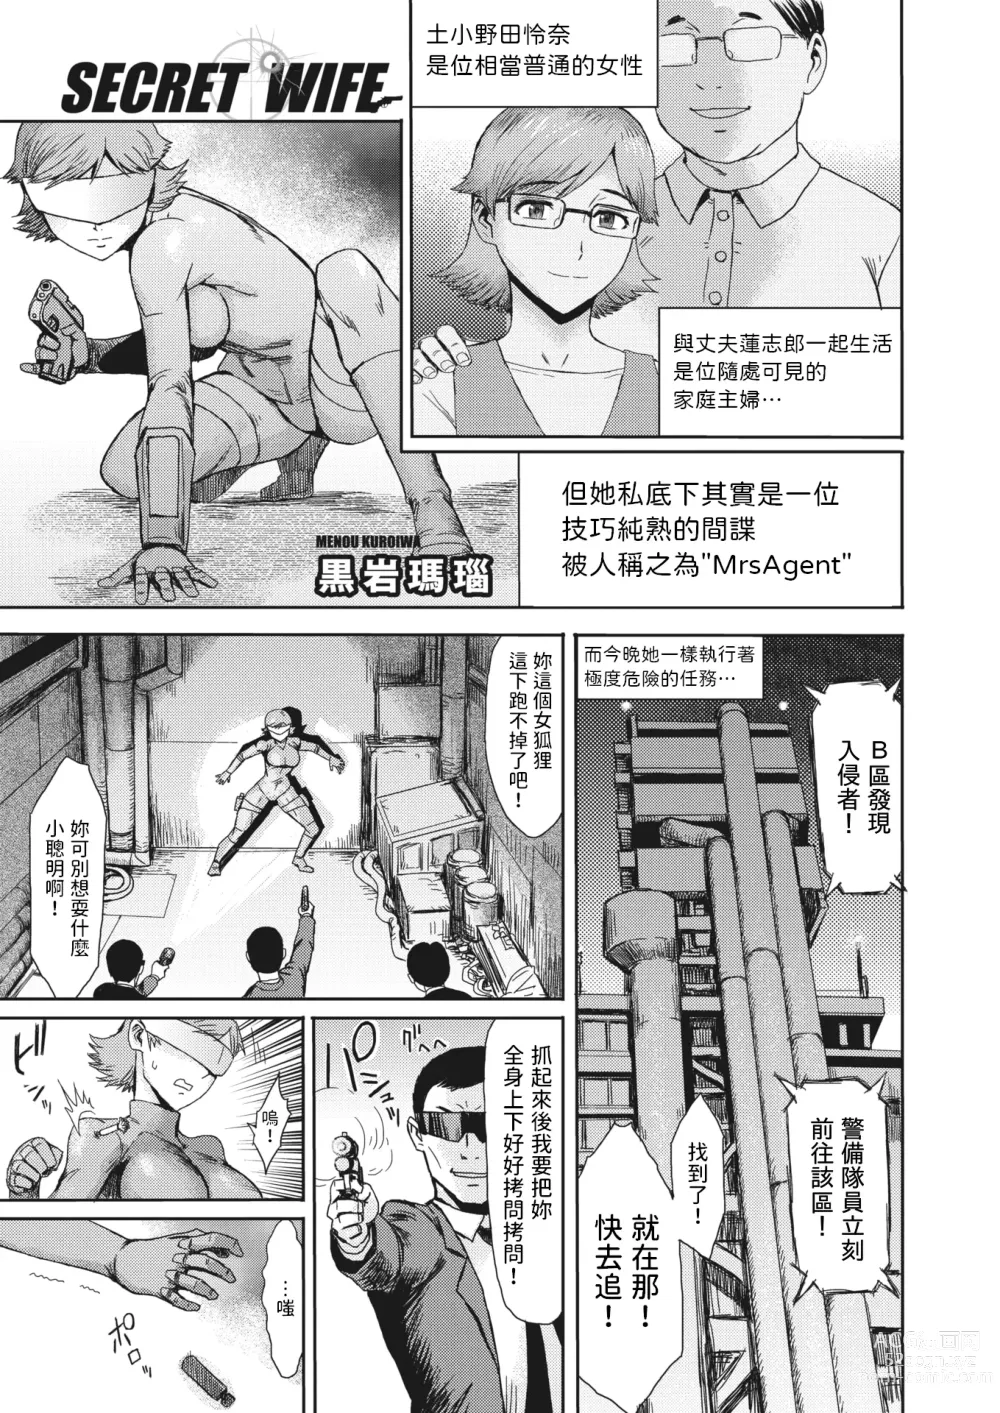 Page 1 of manga SECRET WIFE